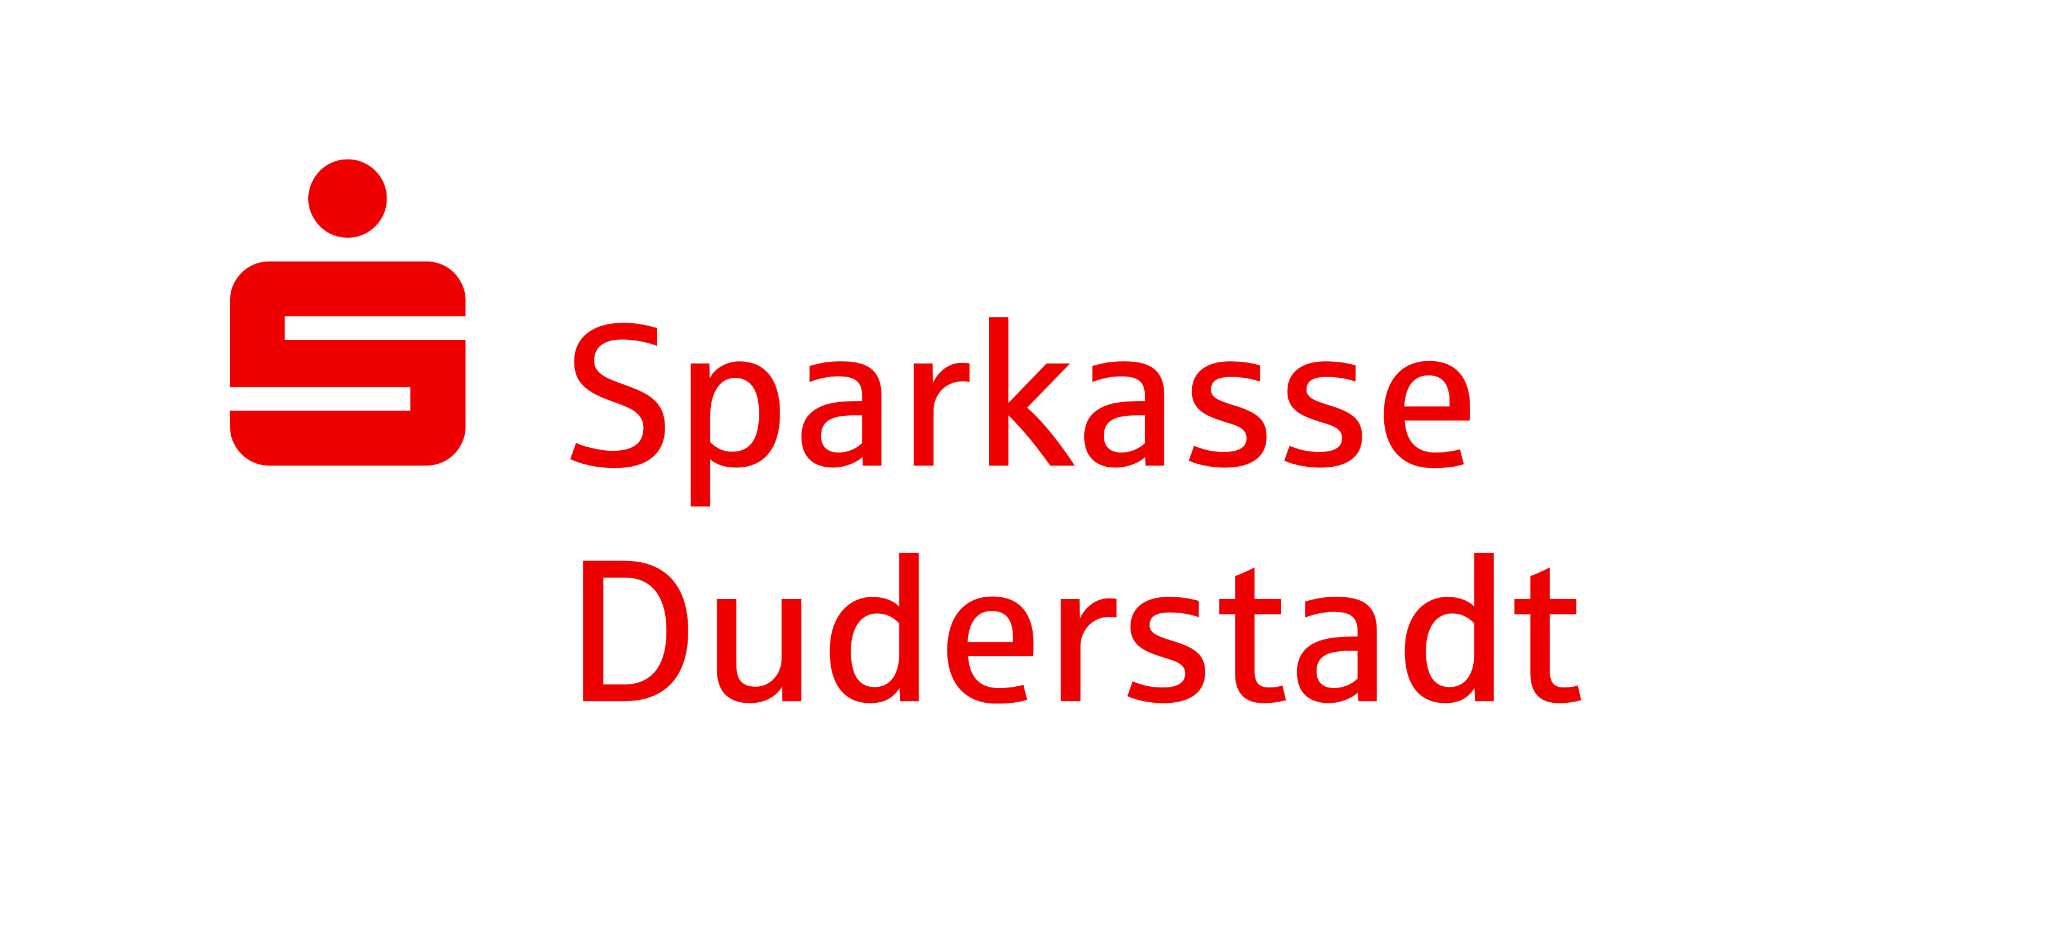 5Sparkasse Duderstadt